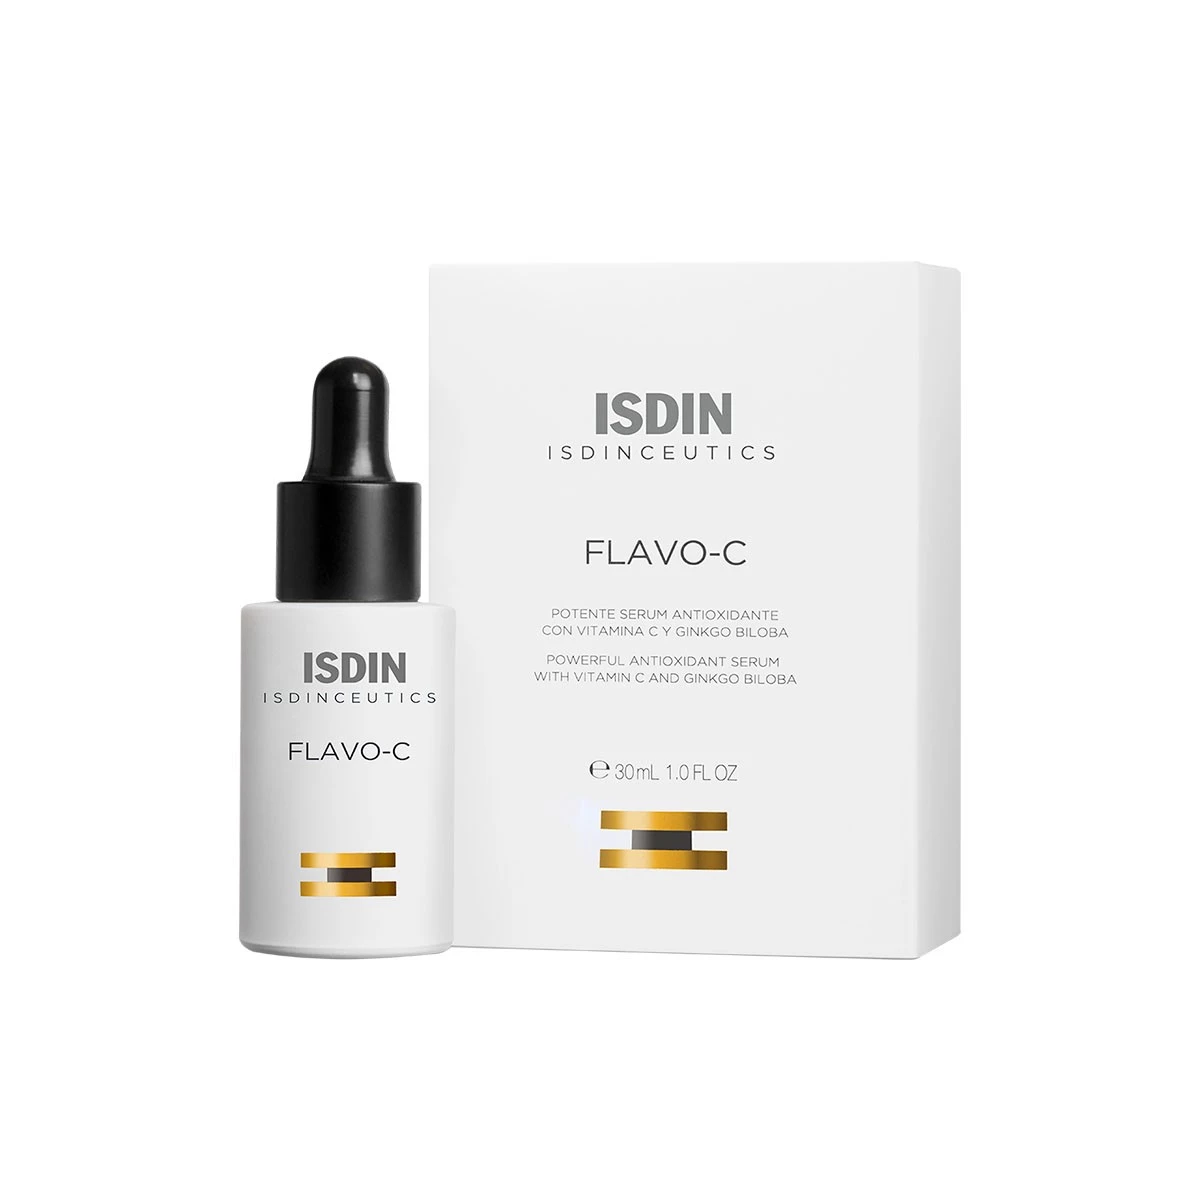 Isdinceutics Flavo-C, 30ml.